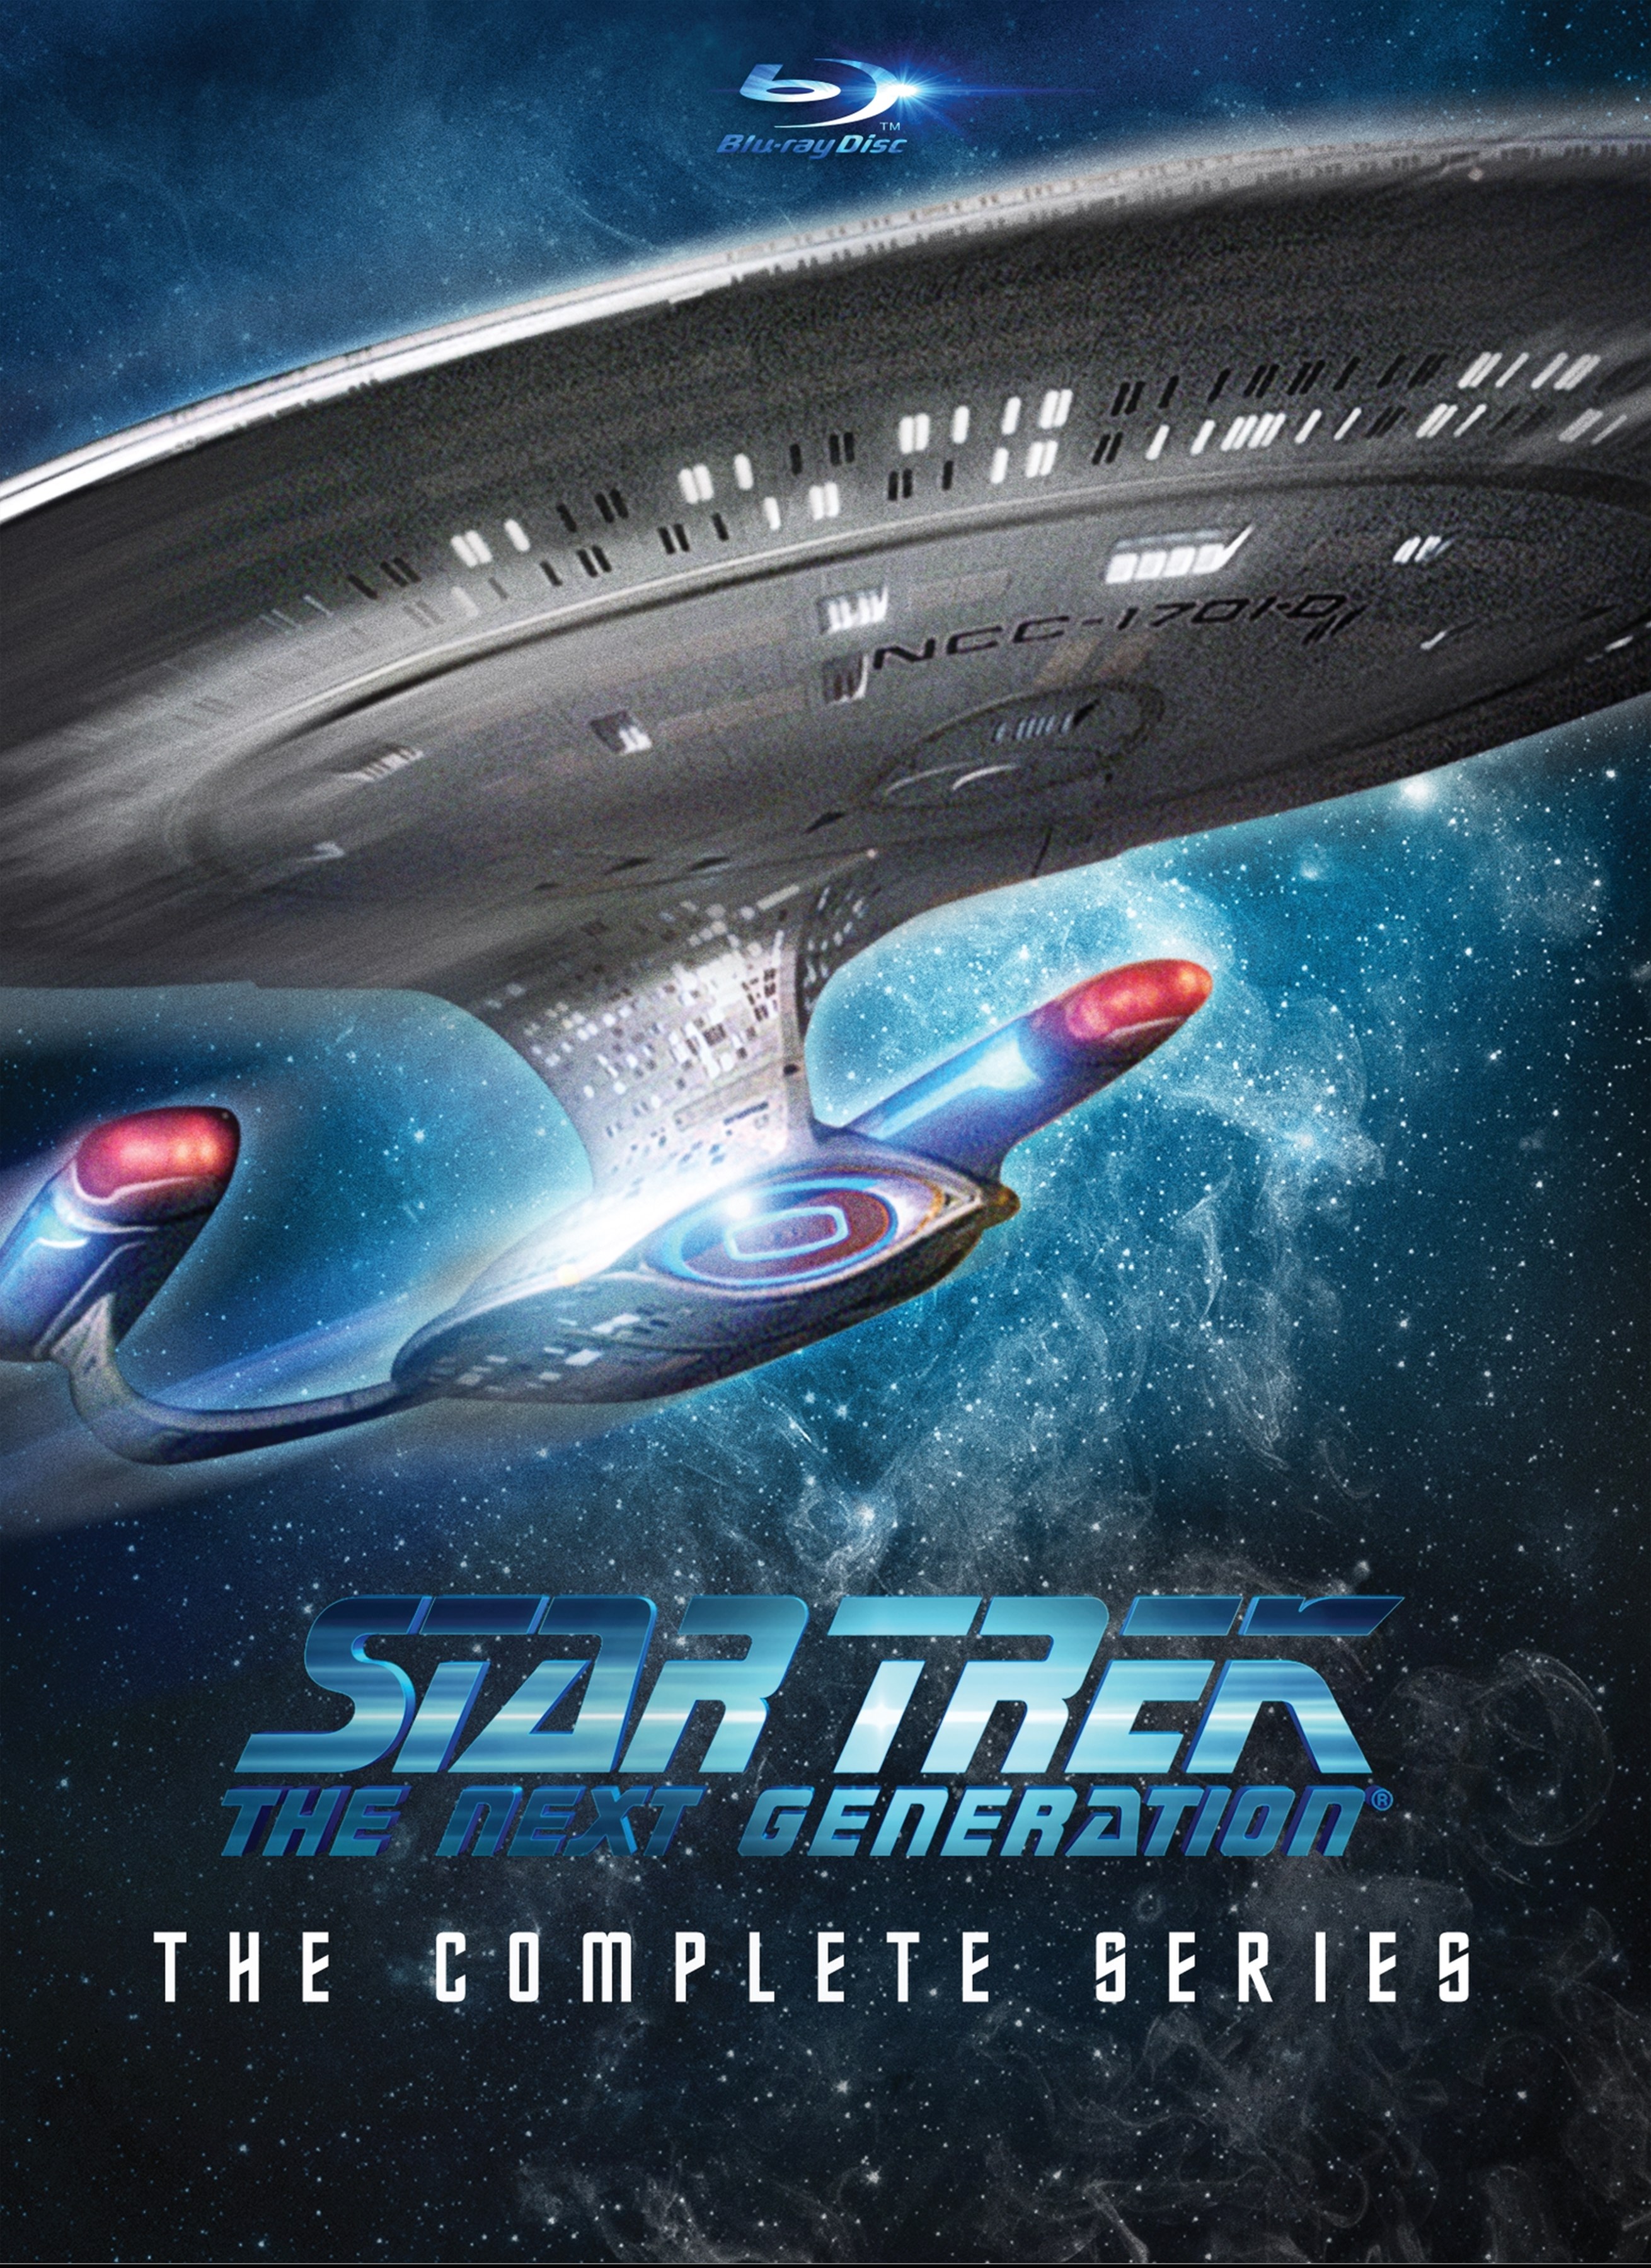 Star Trek The Next Generation season 5 set